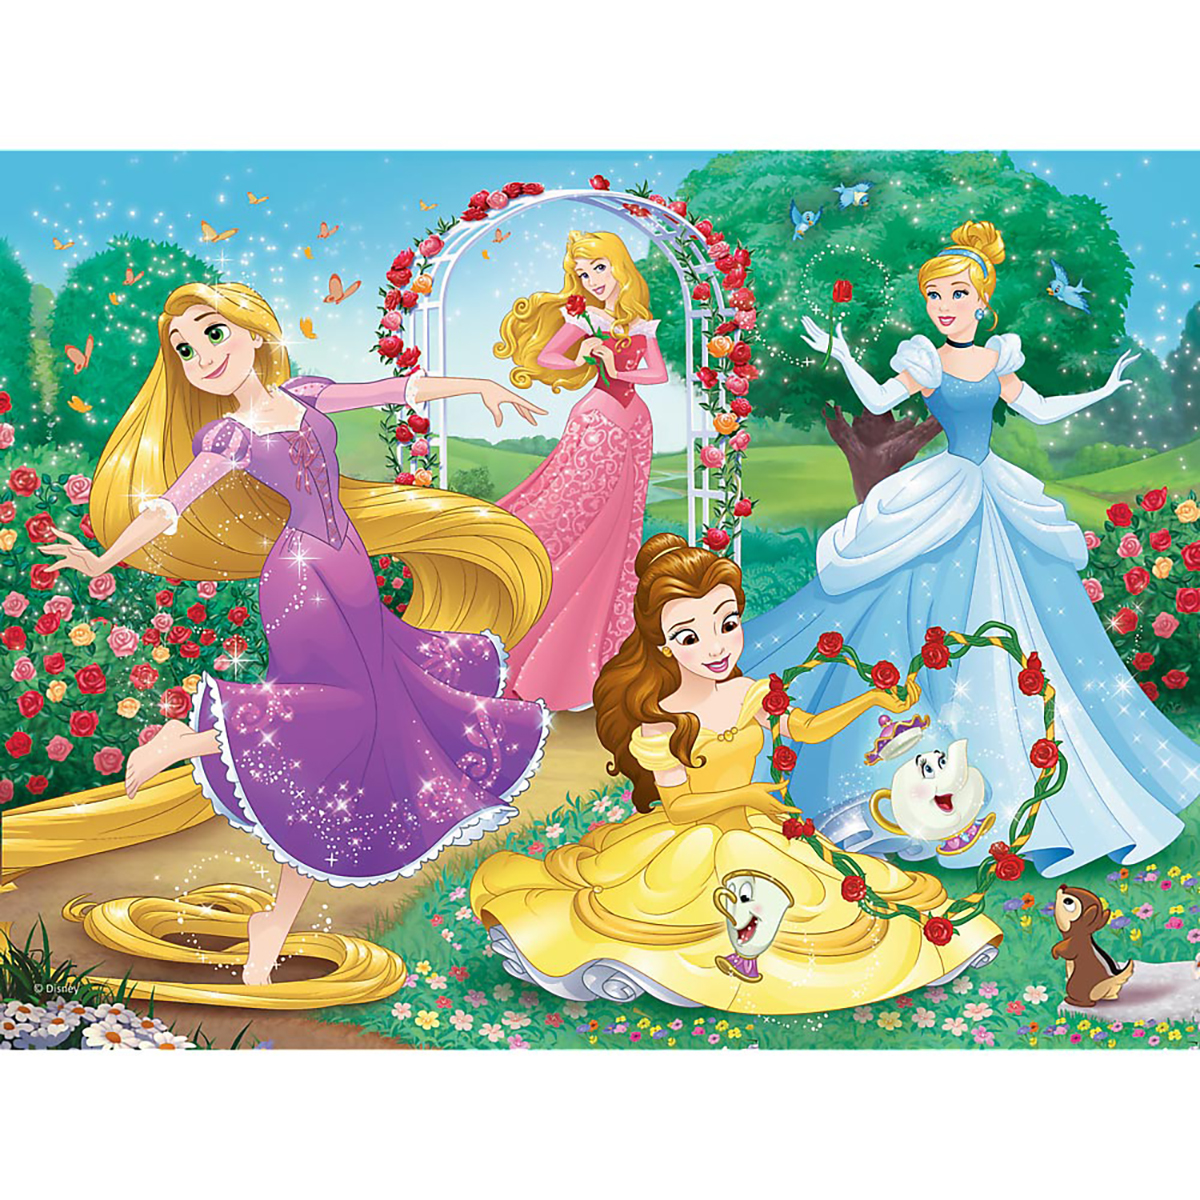 TREFL Disney - Prinzessin Puzzle sein